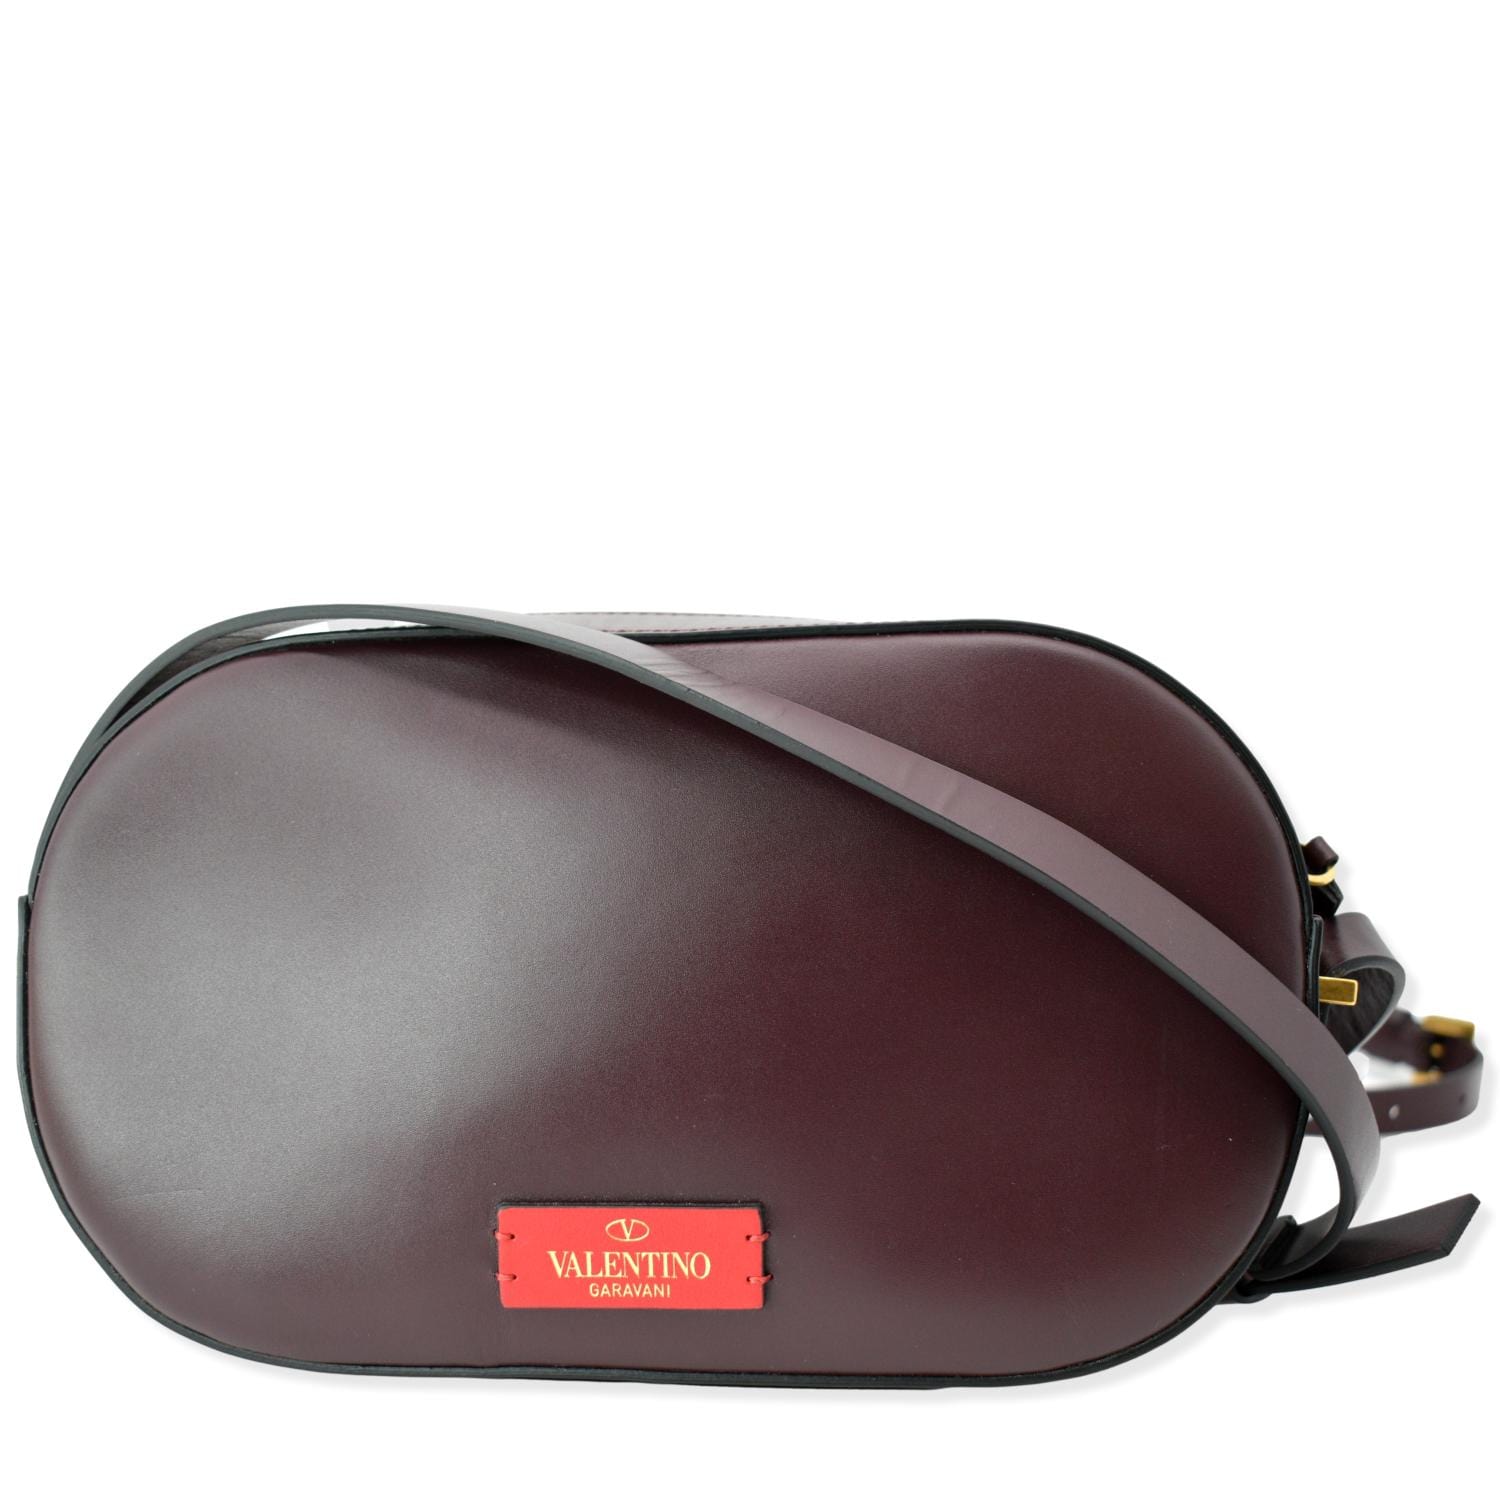 Tote vltn leather crossbody bag Valentino Garavani Red in Leather - 21844569